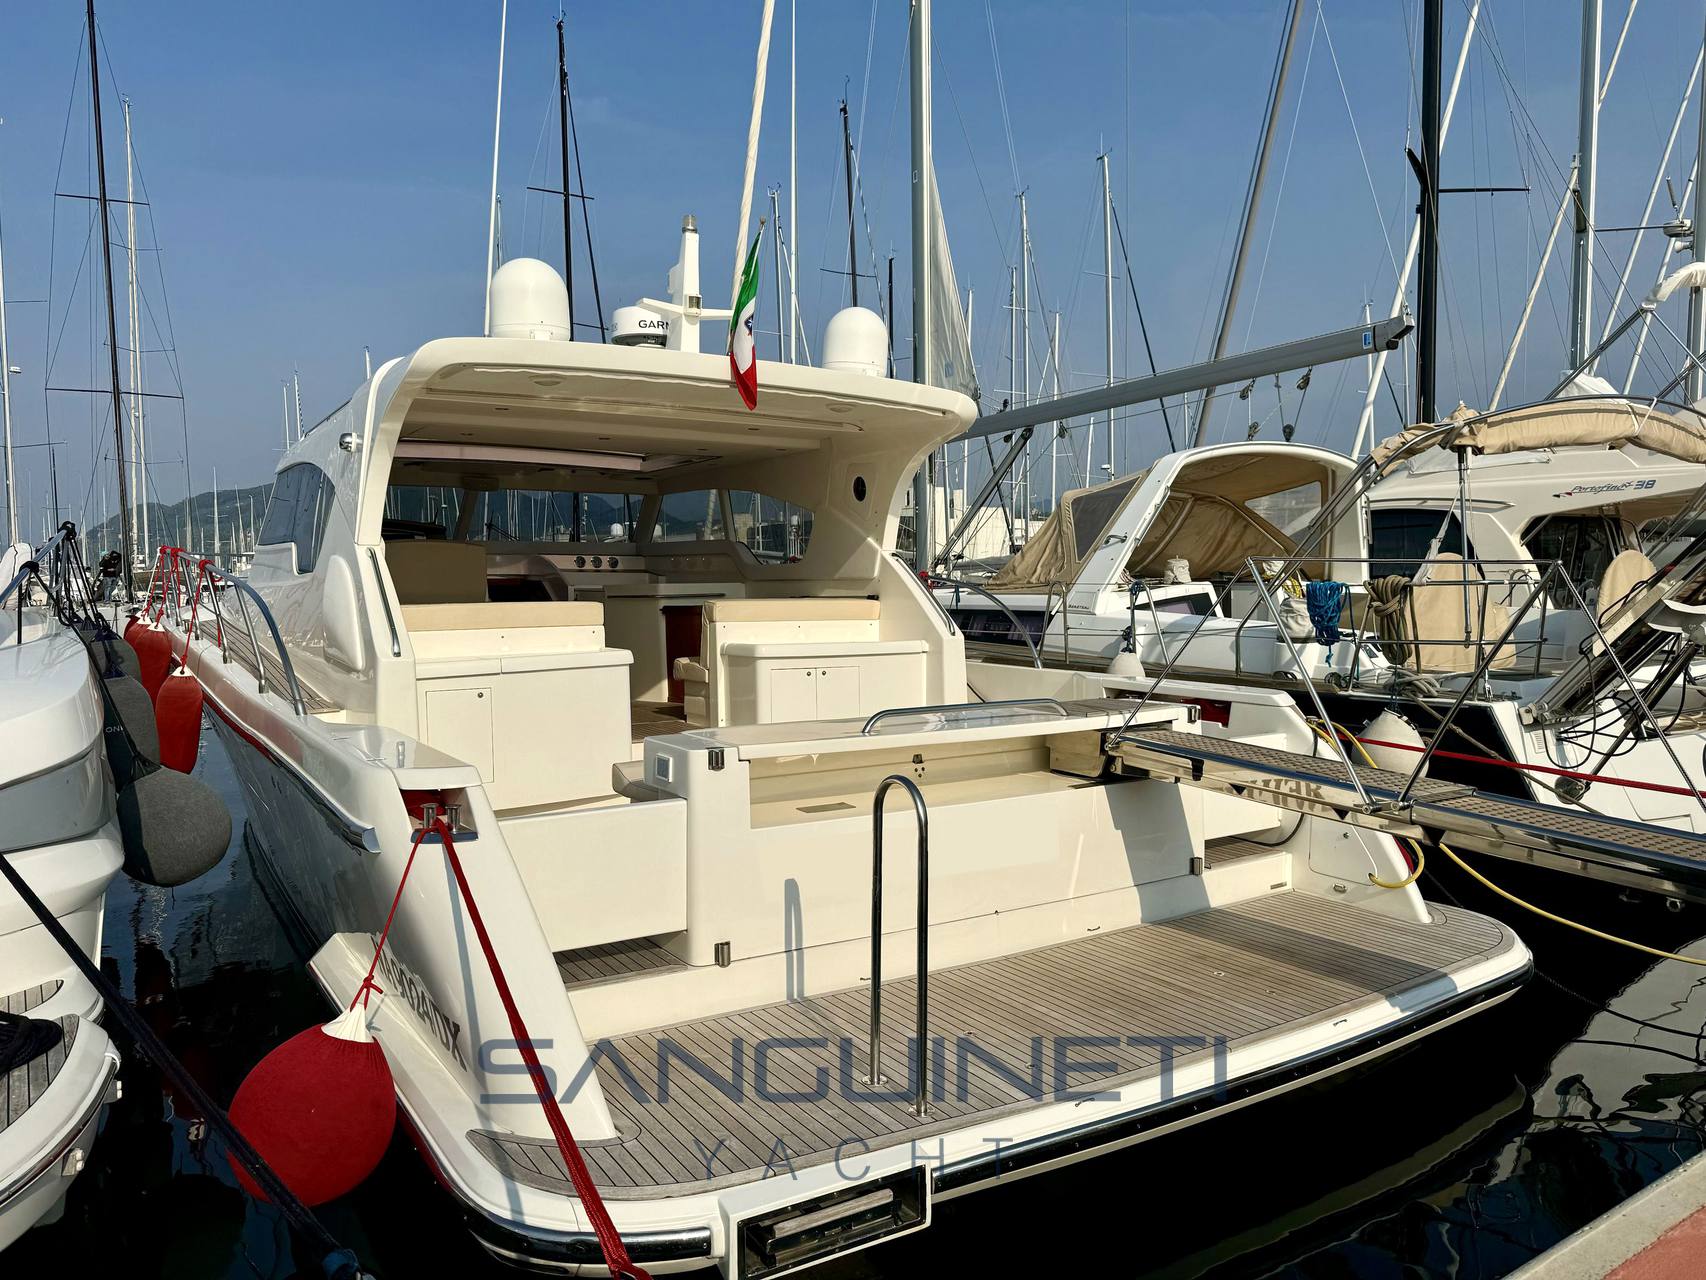 Gagliotta 52 Motor boat used for sale